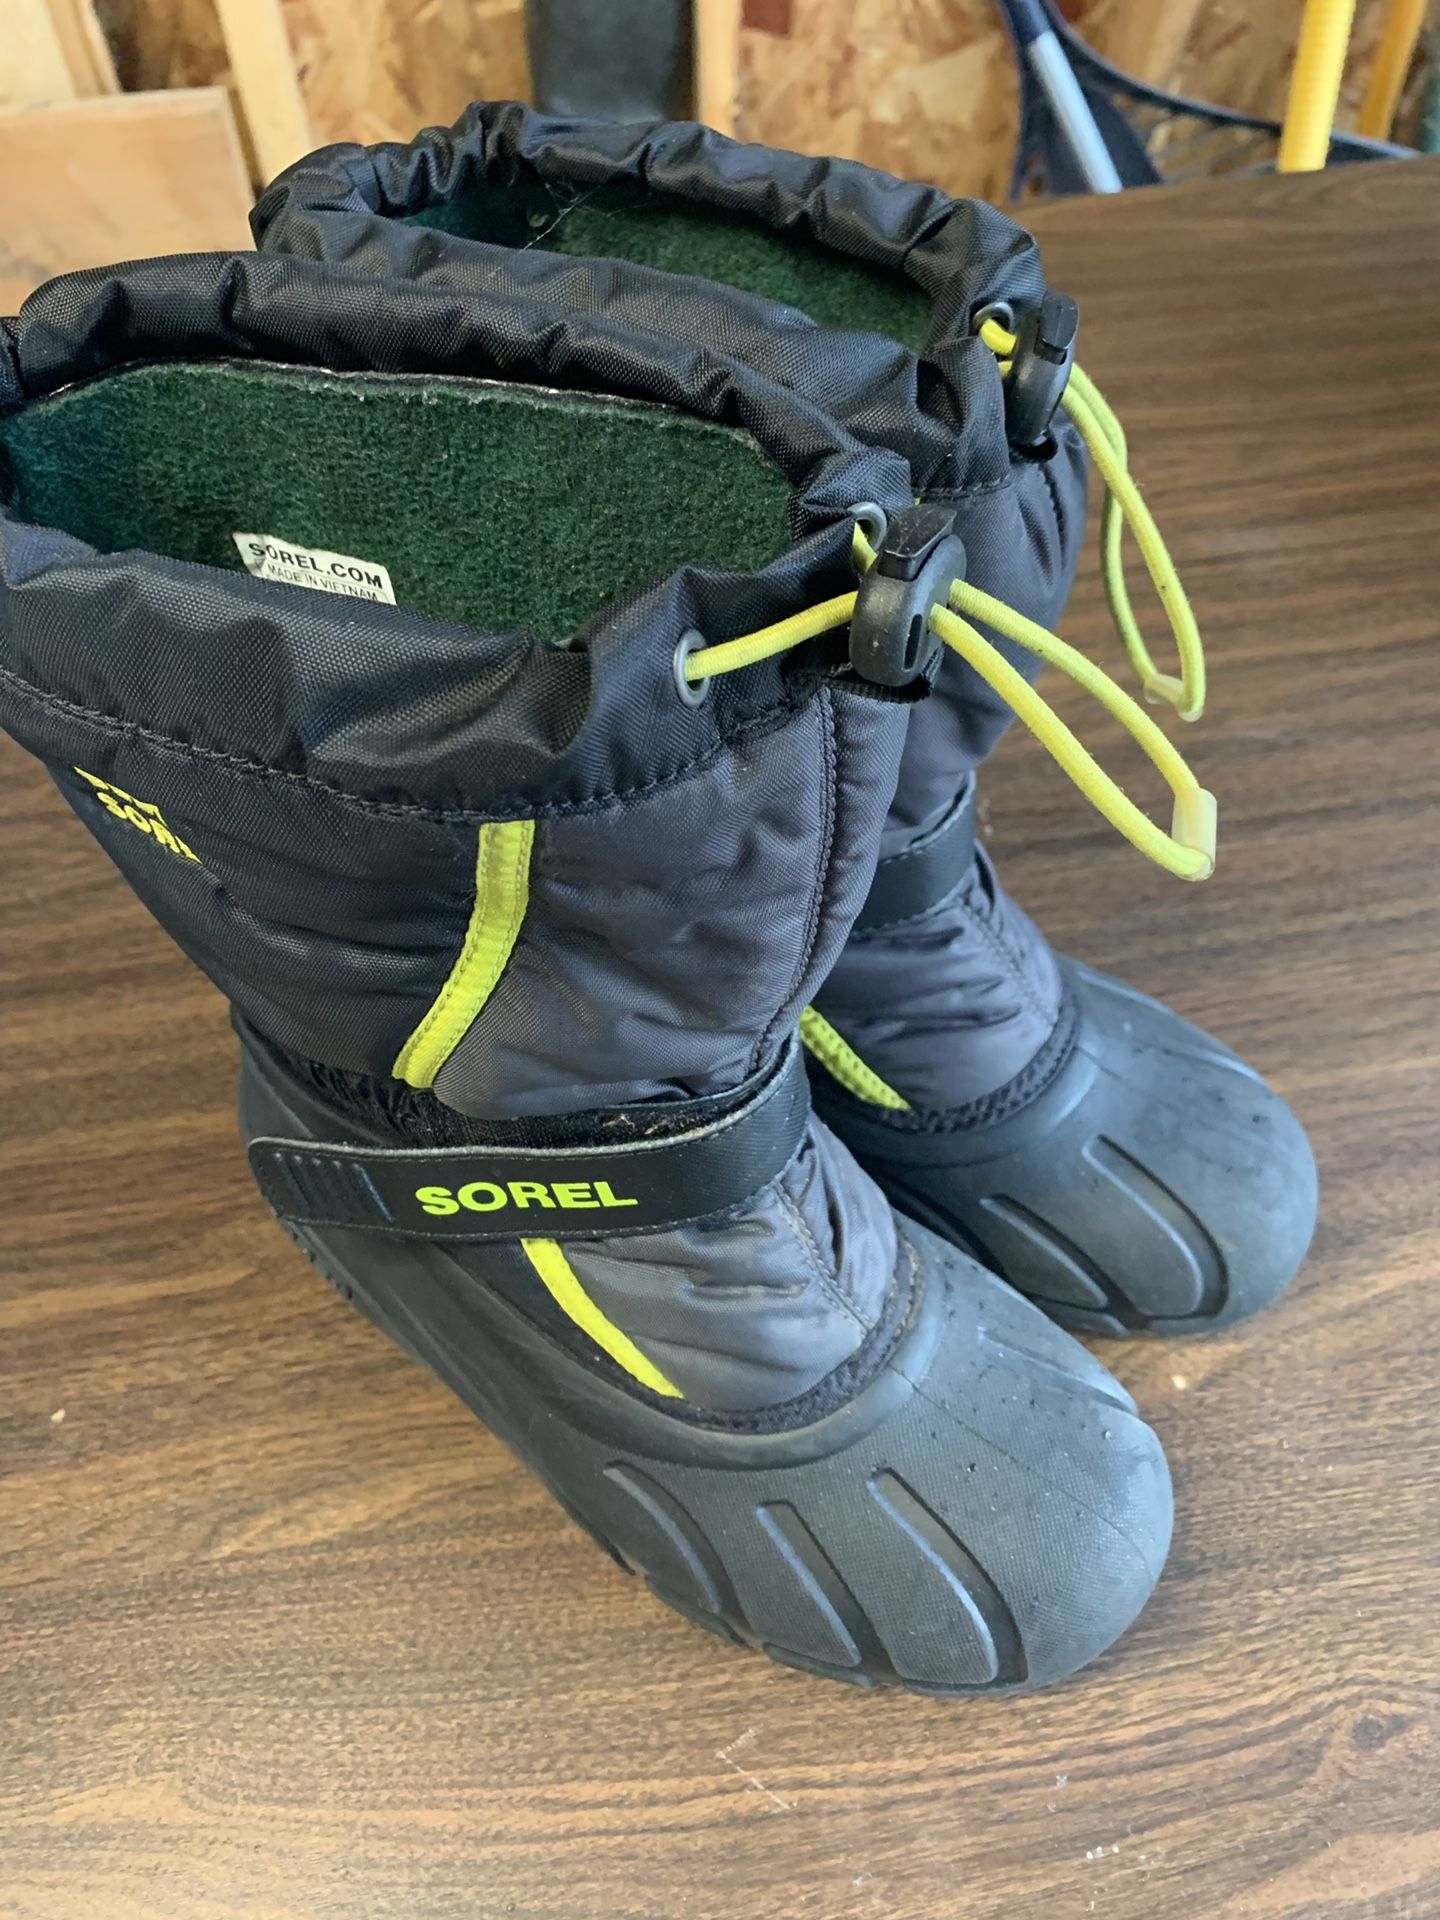 Sorel kids snow boots size 4